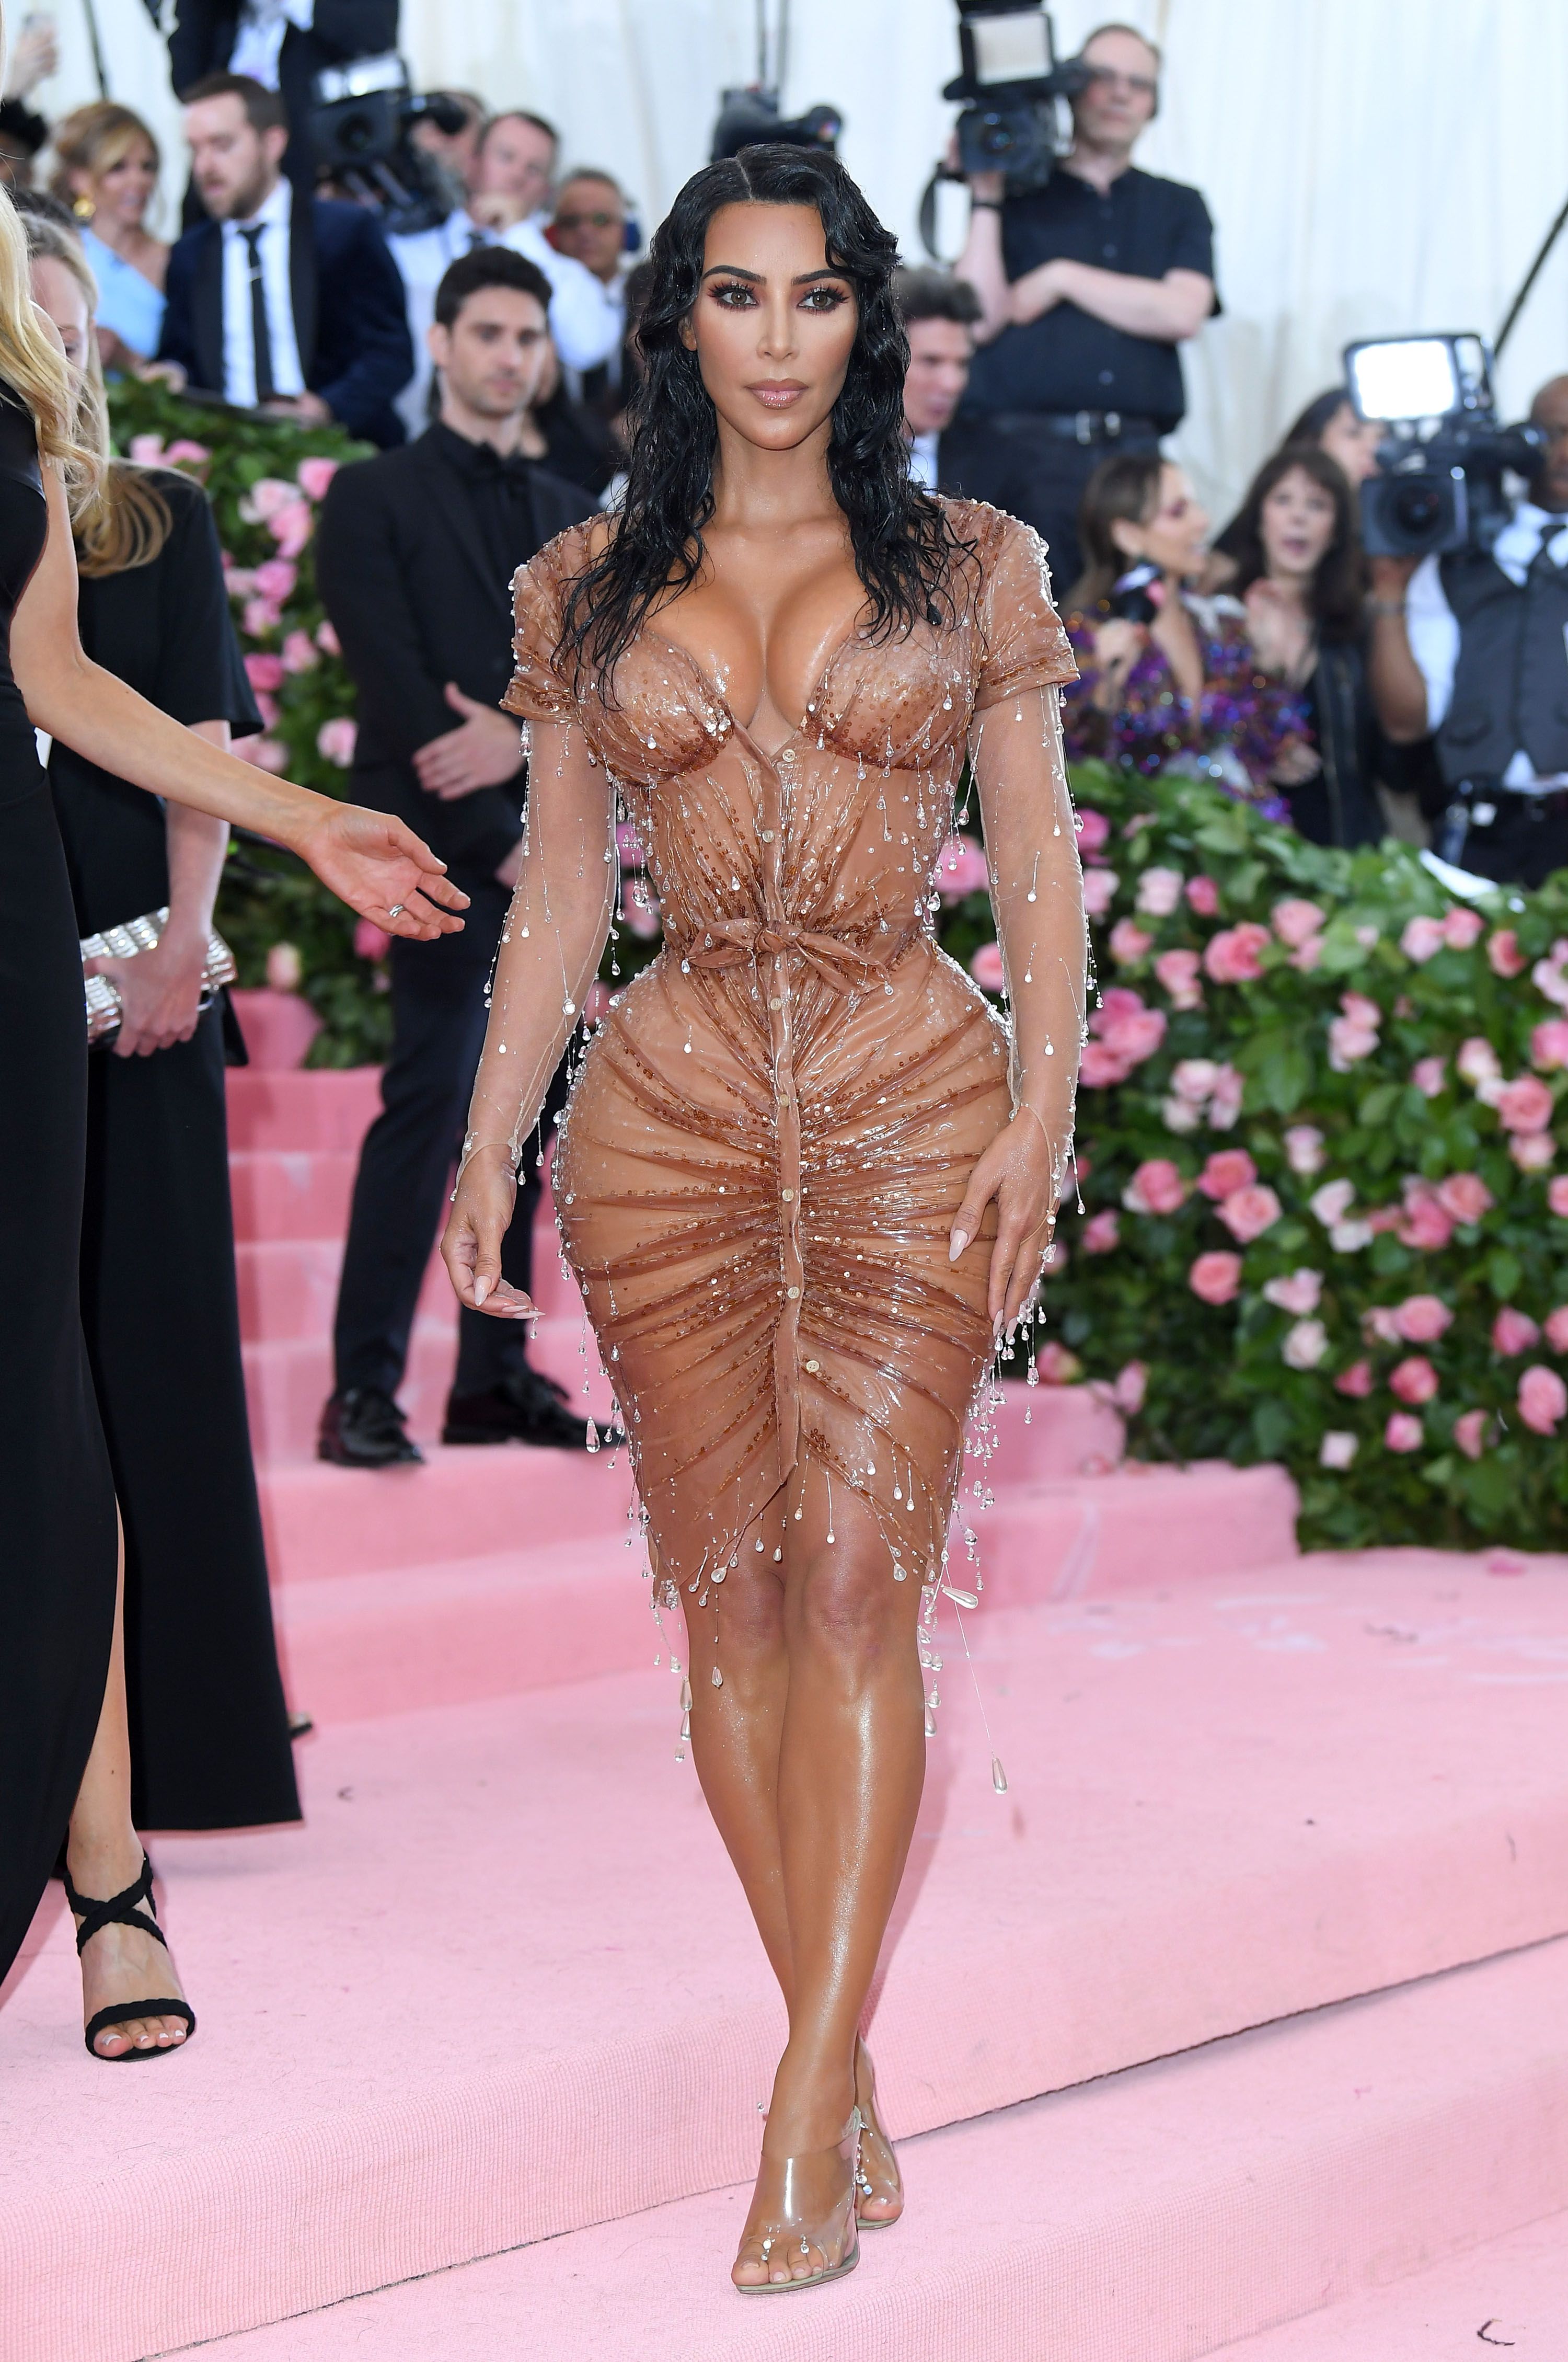 Kim Kardashian Early 2000s Kim Kardashian West At 40 Looking Back At Her Style Evolution On